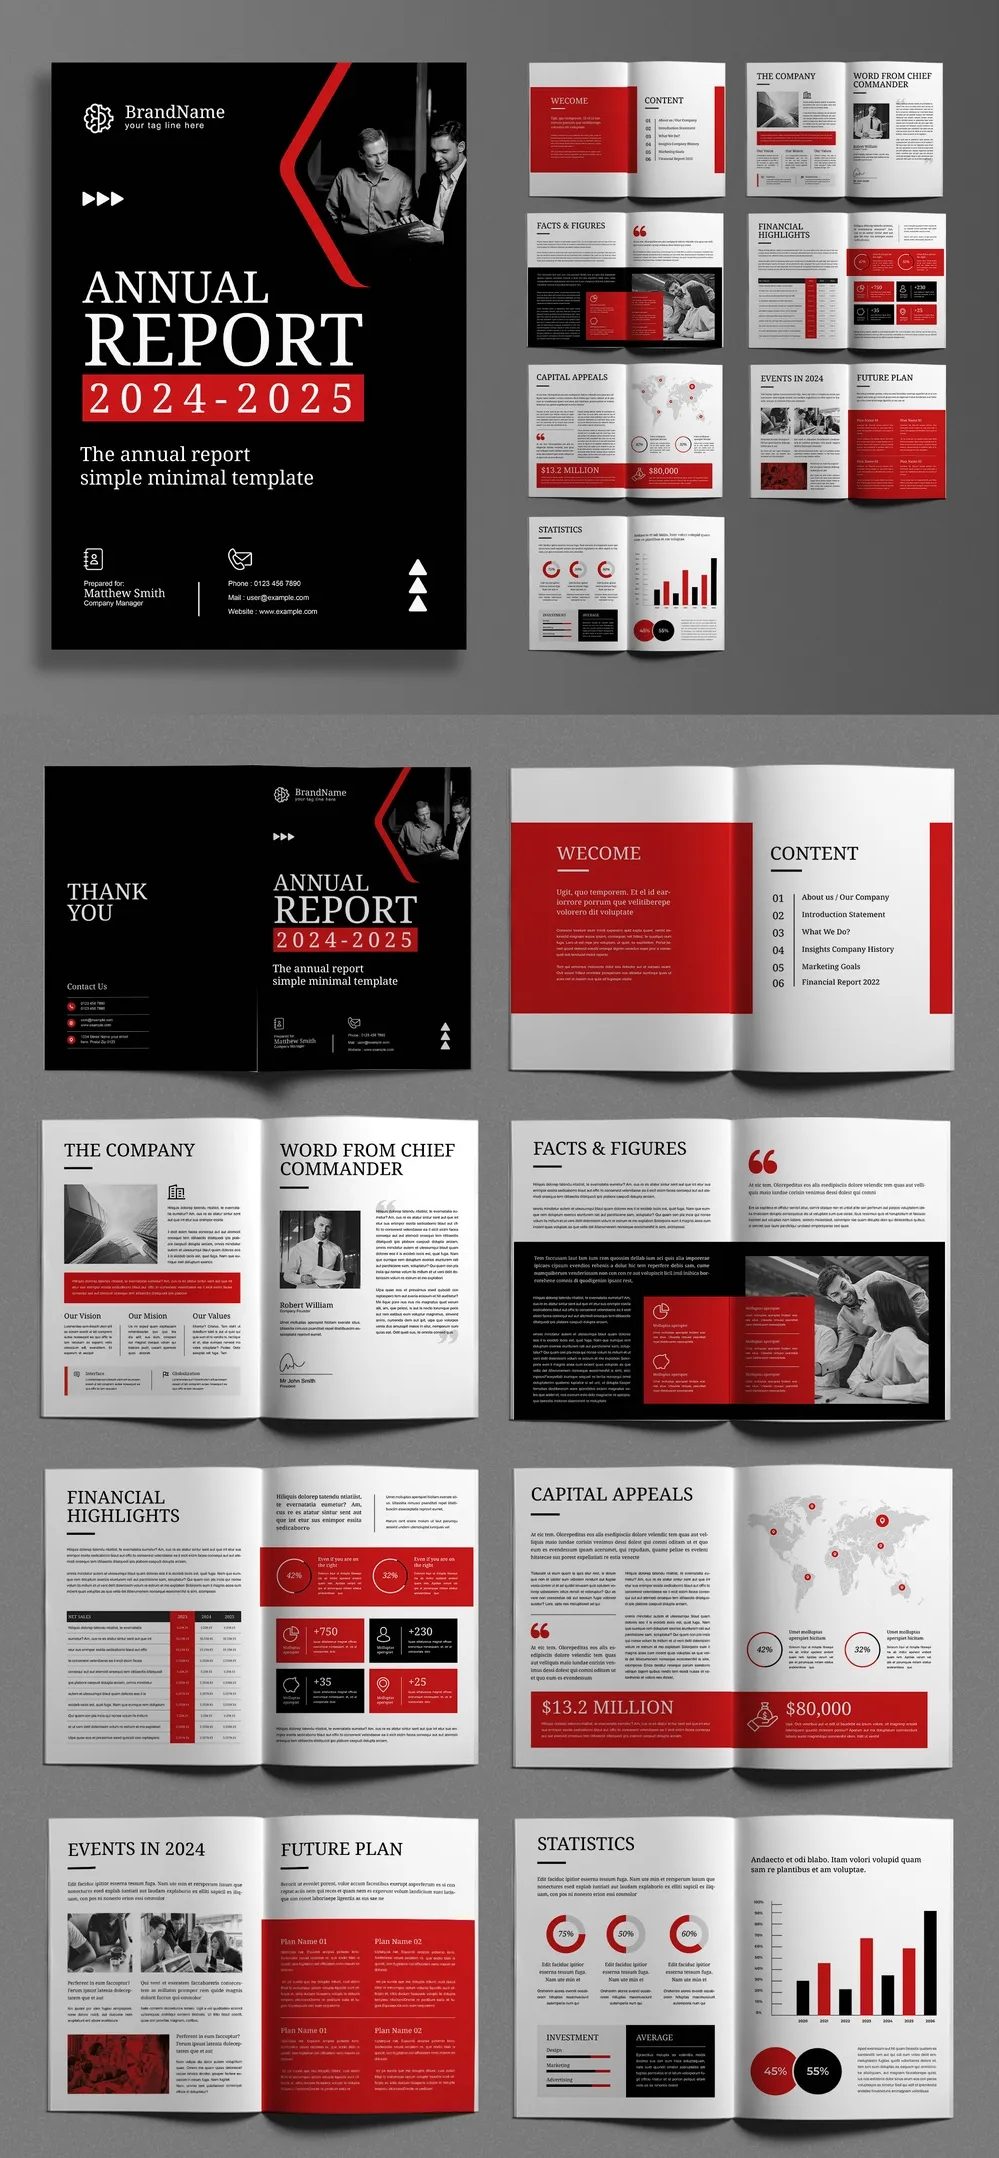 Adobestock - Annual Report Template 714968057